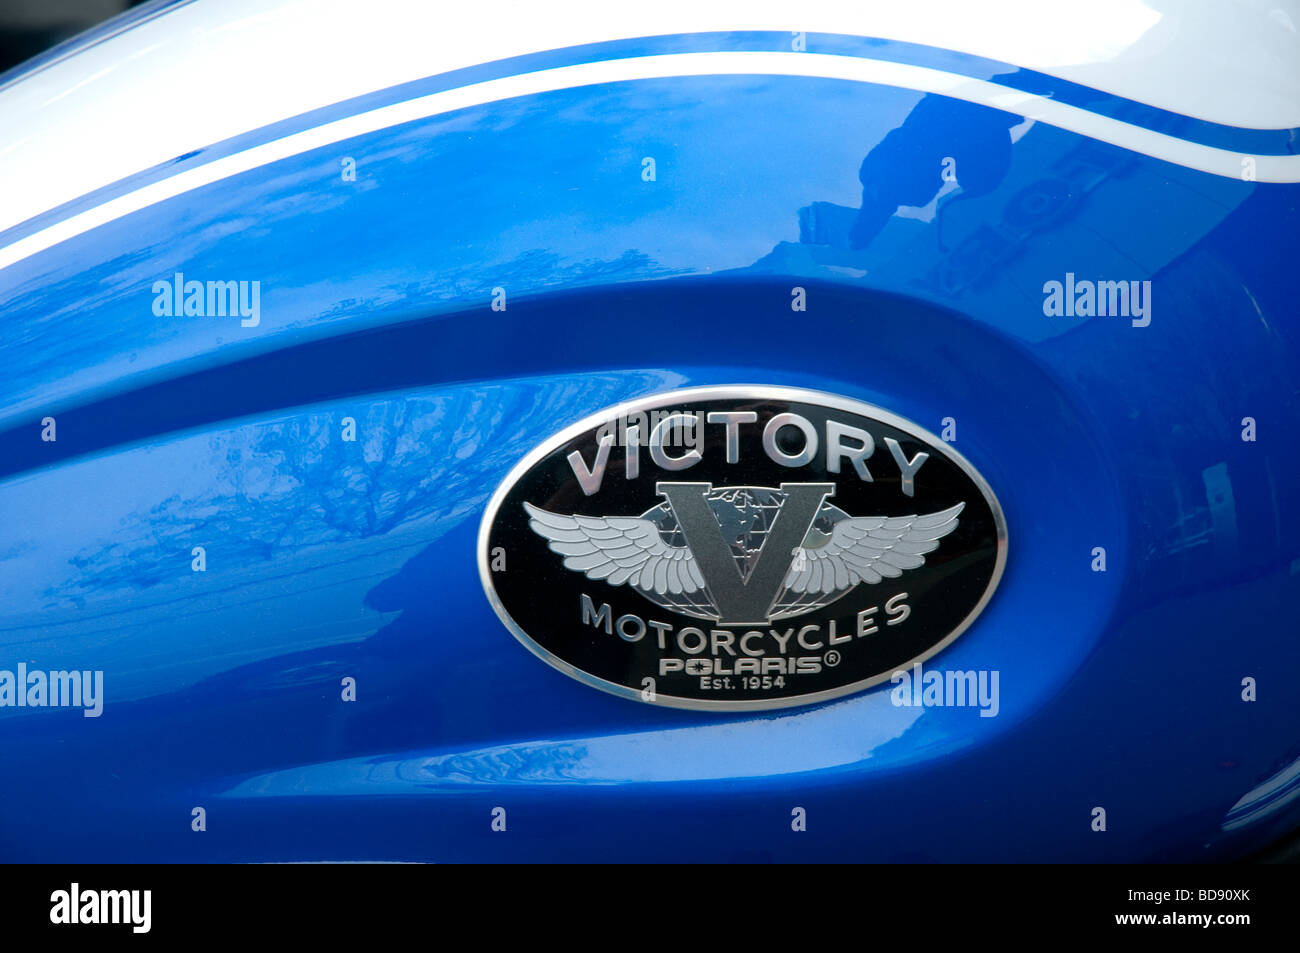 Victory motor cycle logo on petrol tank Stock Photo